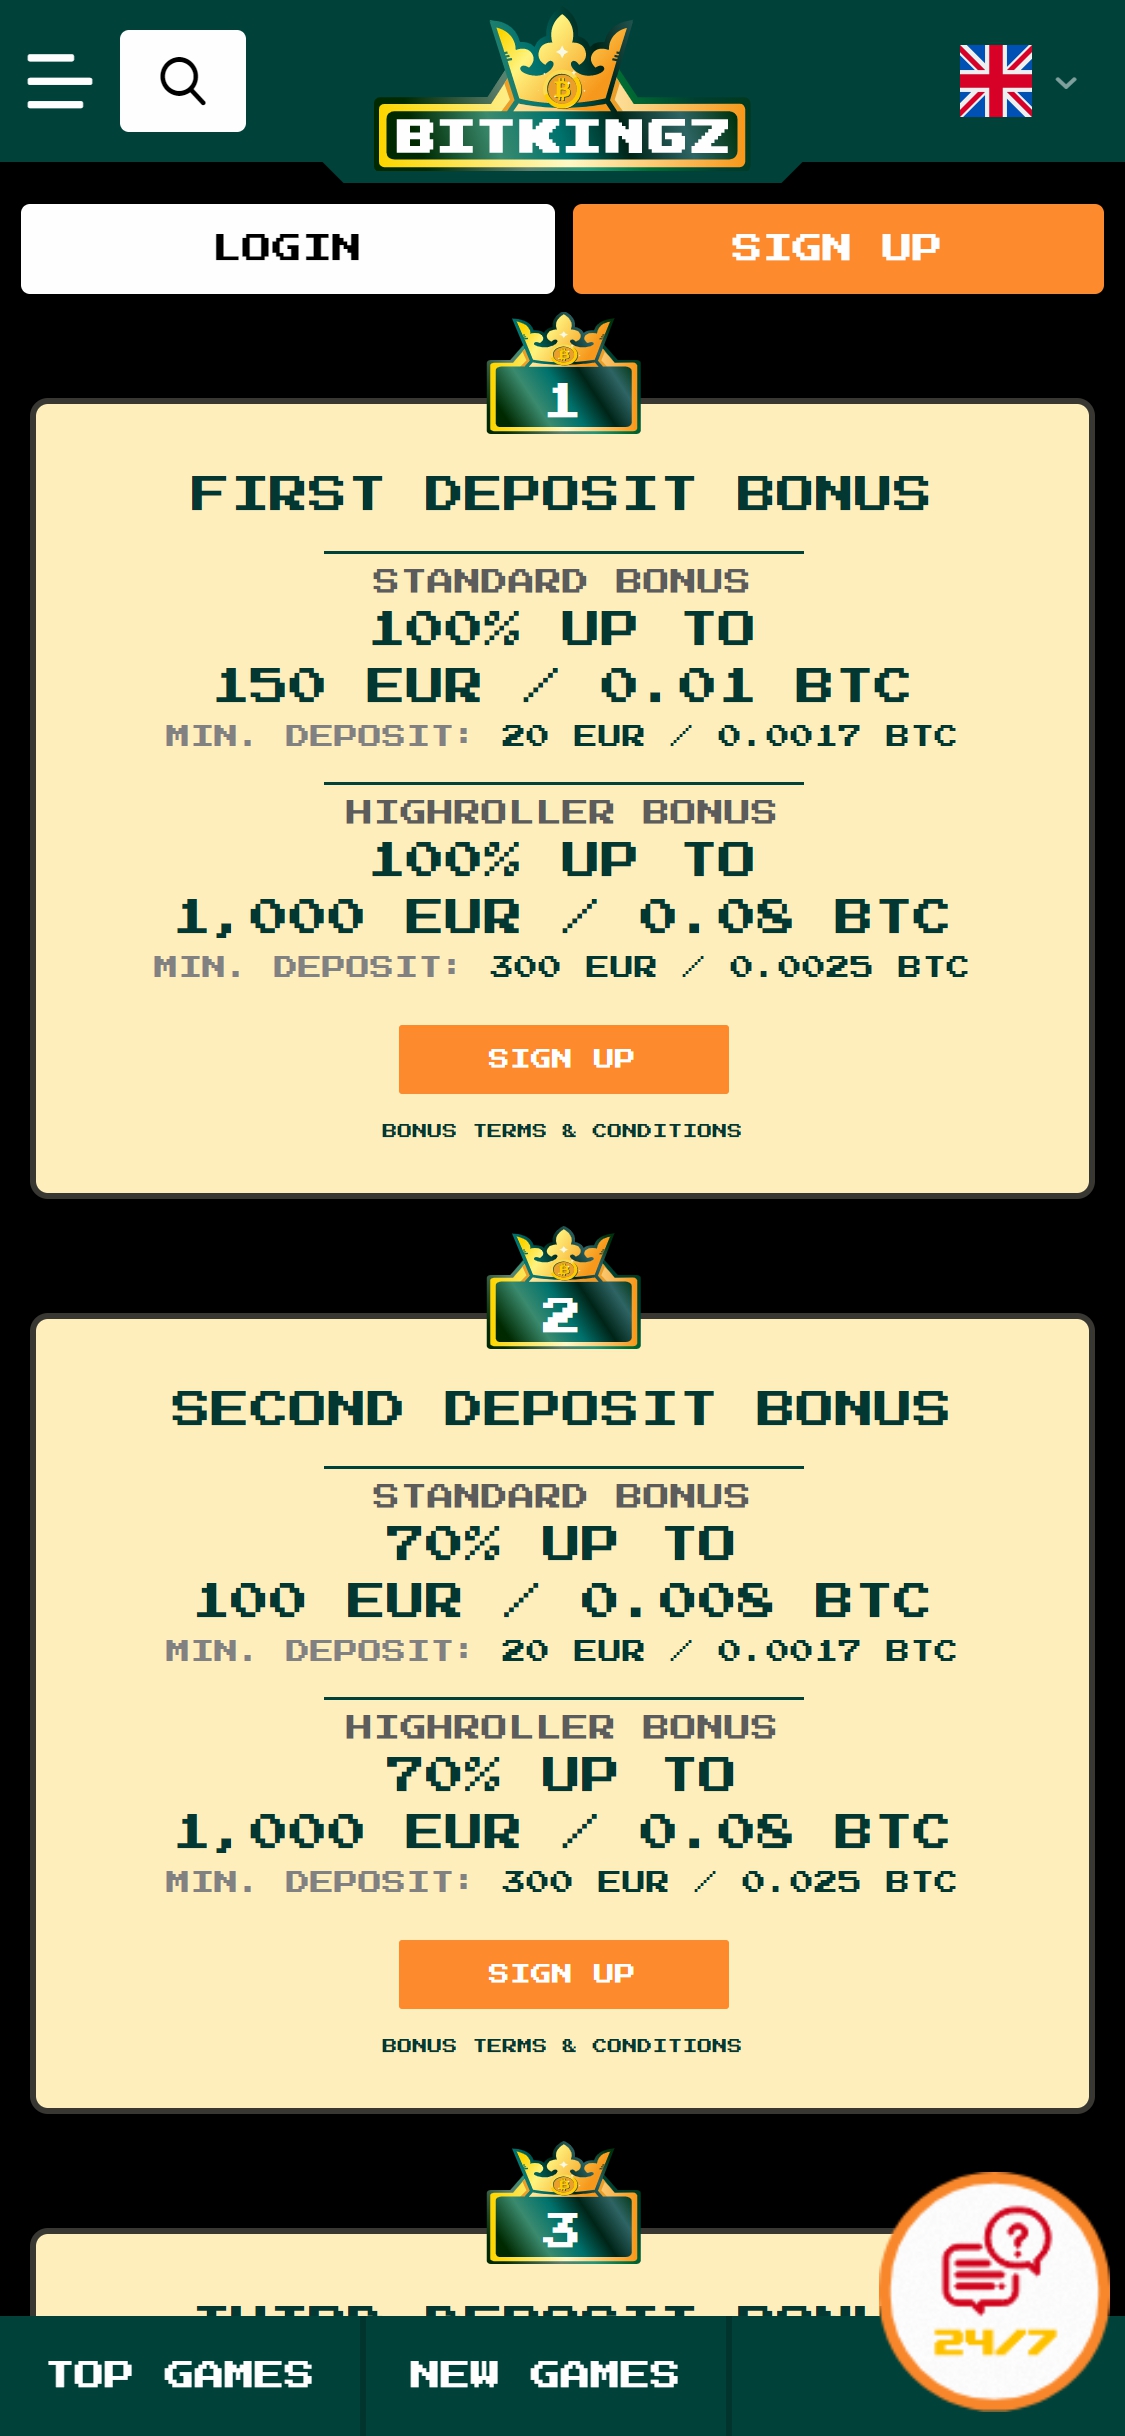 Bitkingz Casino Mobile No Deposit Bonus Review